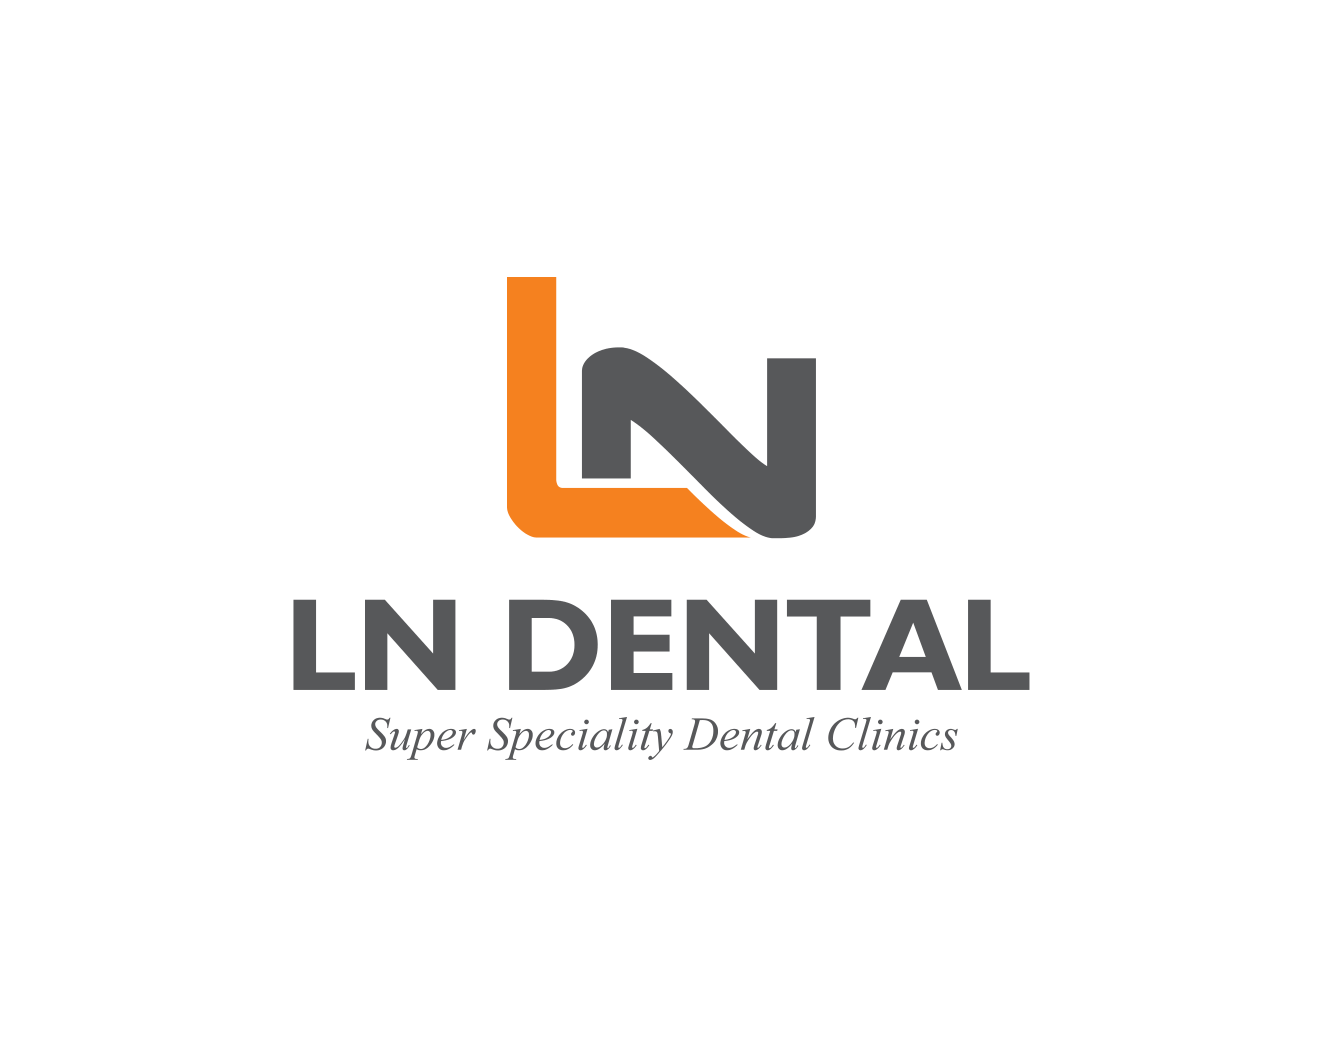 LN Dental Logo